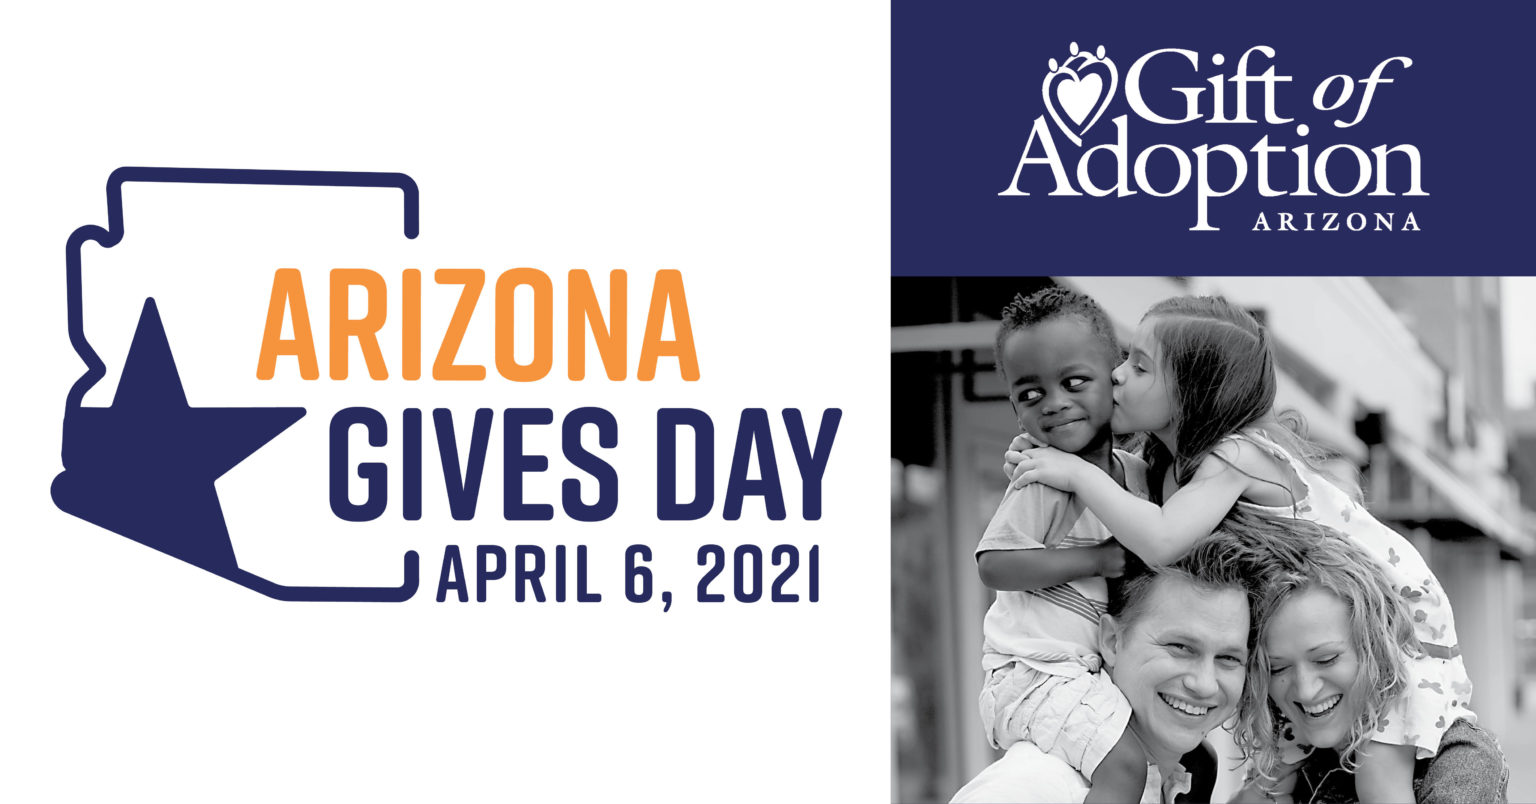 Arizona Gives Day 2021 – Adoption Grants | Gift of Adoption Fund